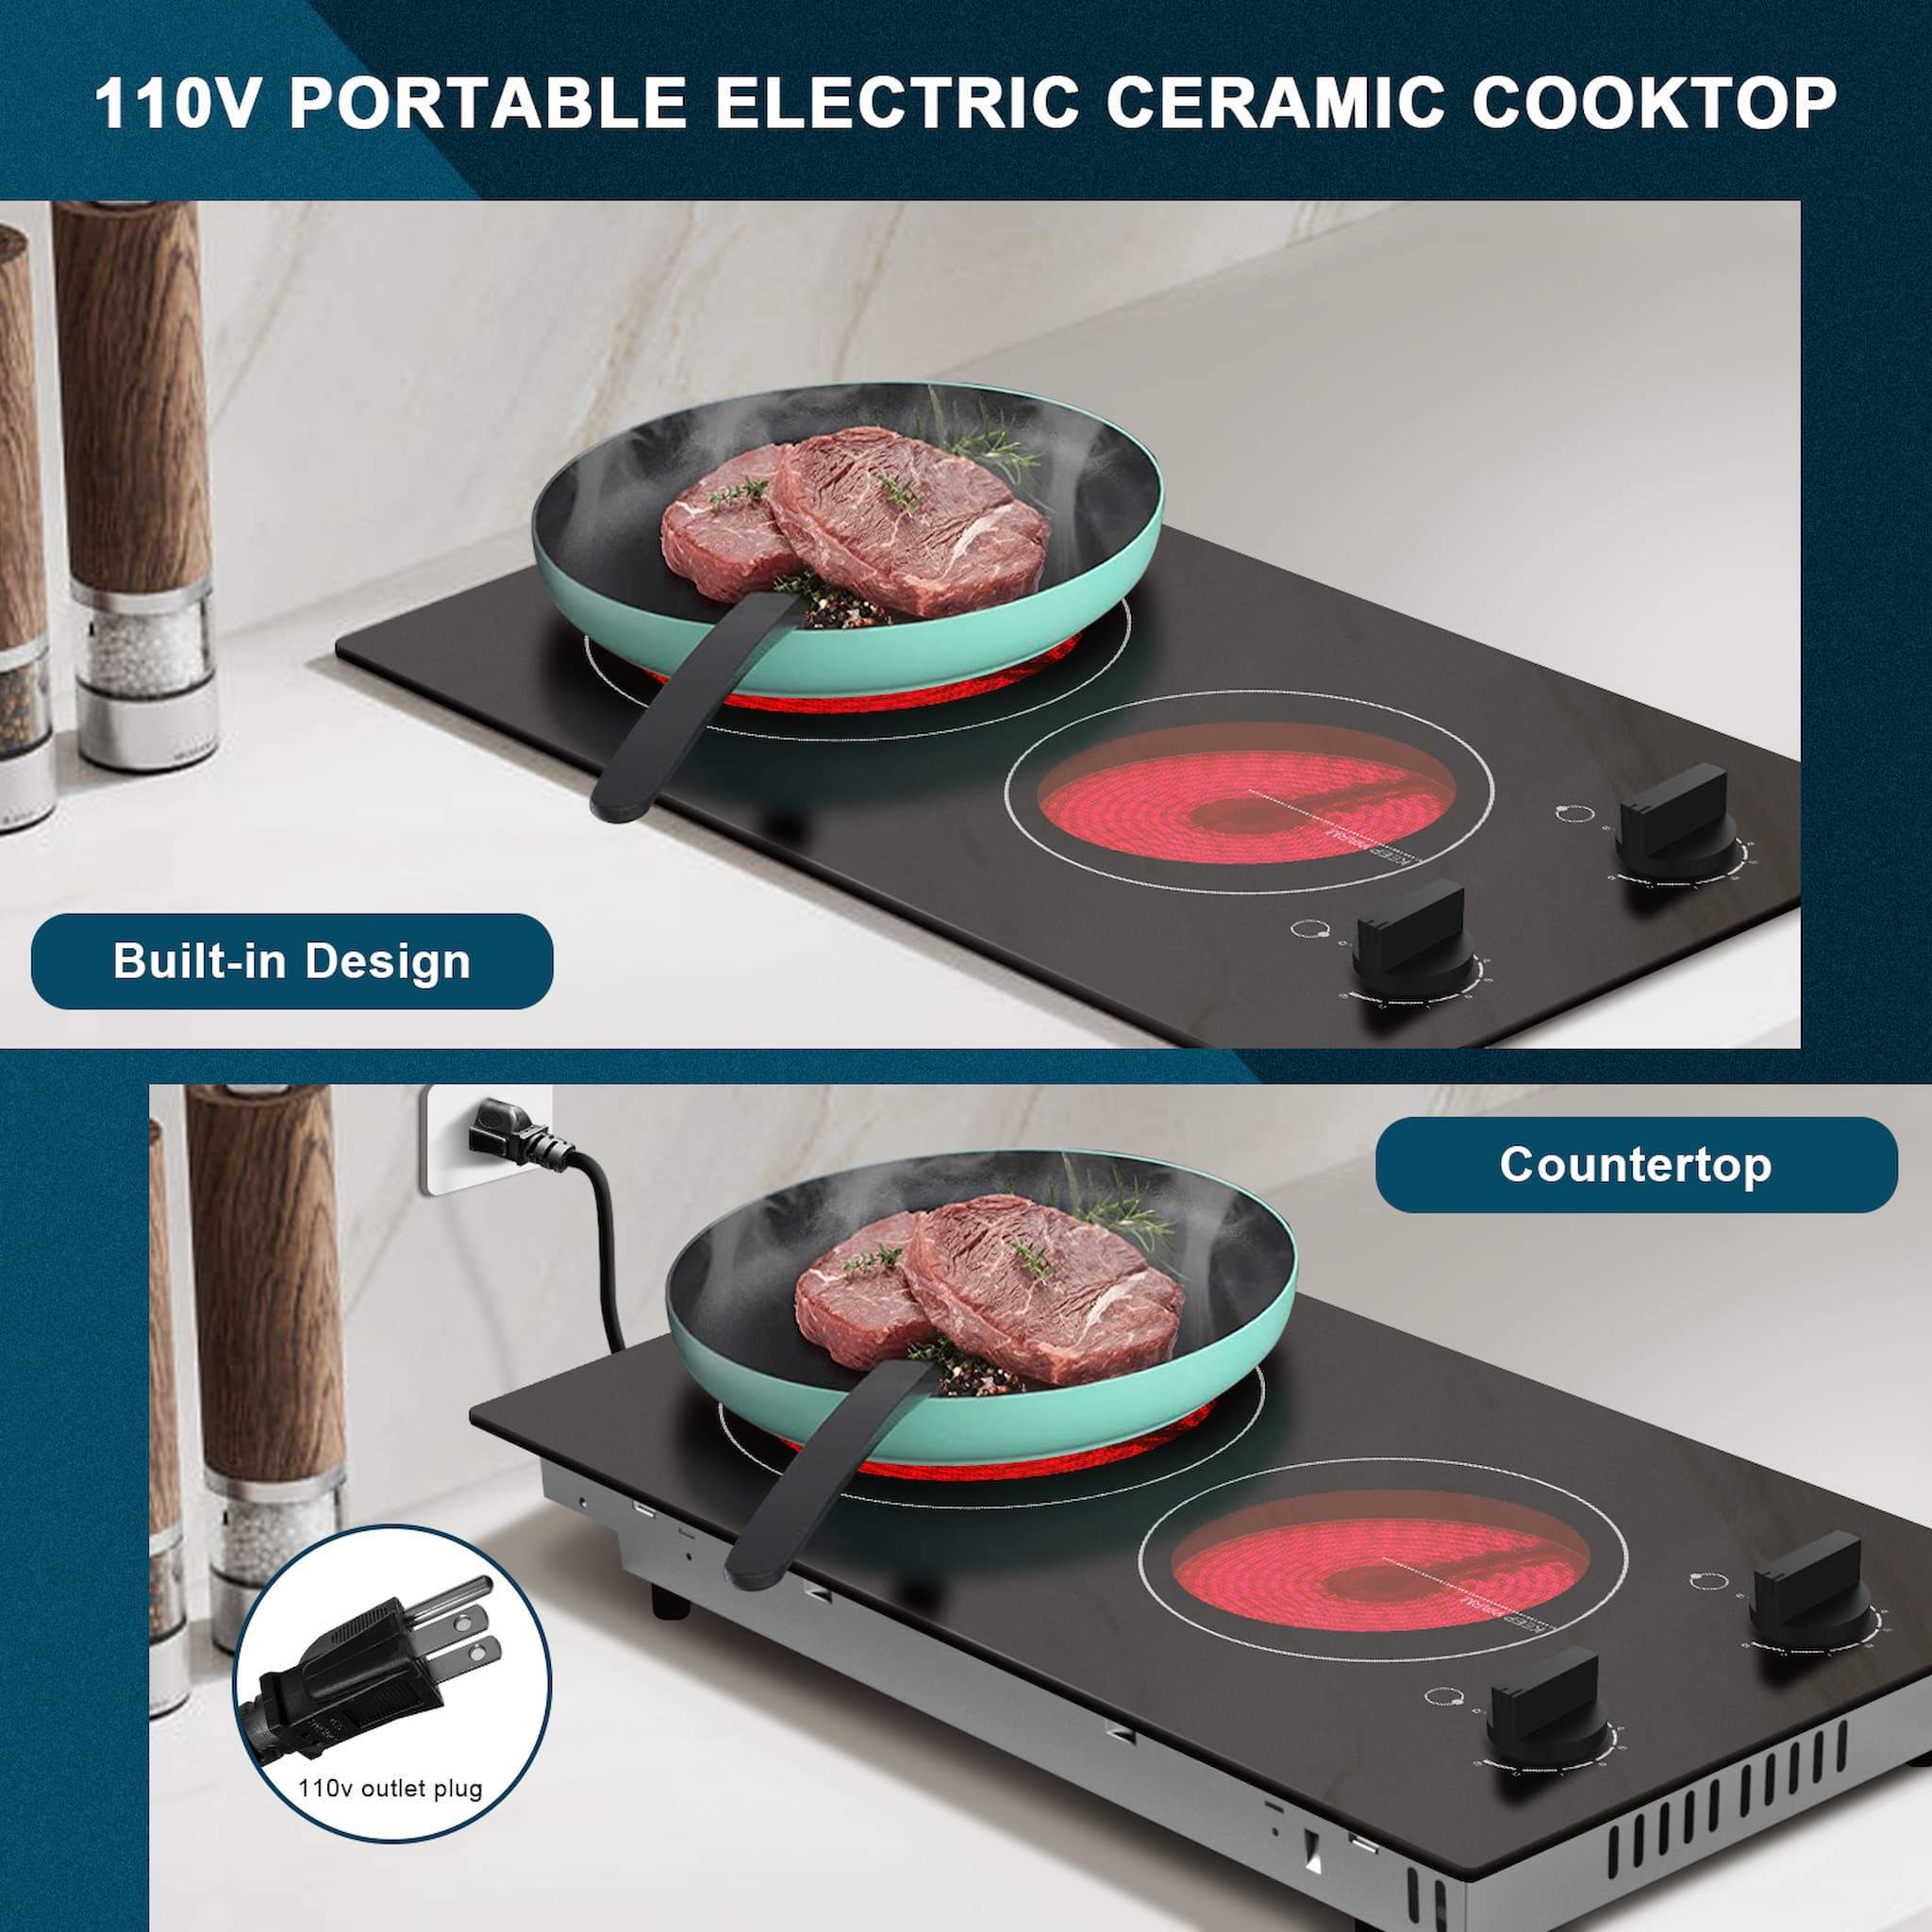 Karinear Portable Electric Cooktop 2 Burners, 110v Plug in